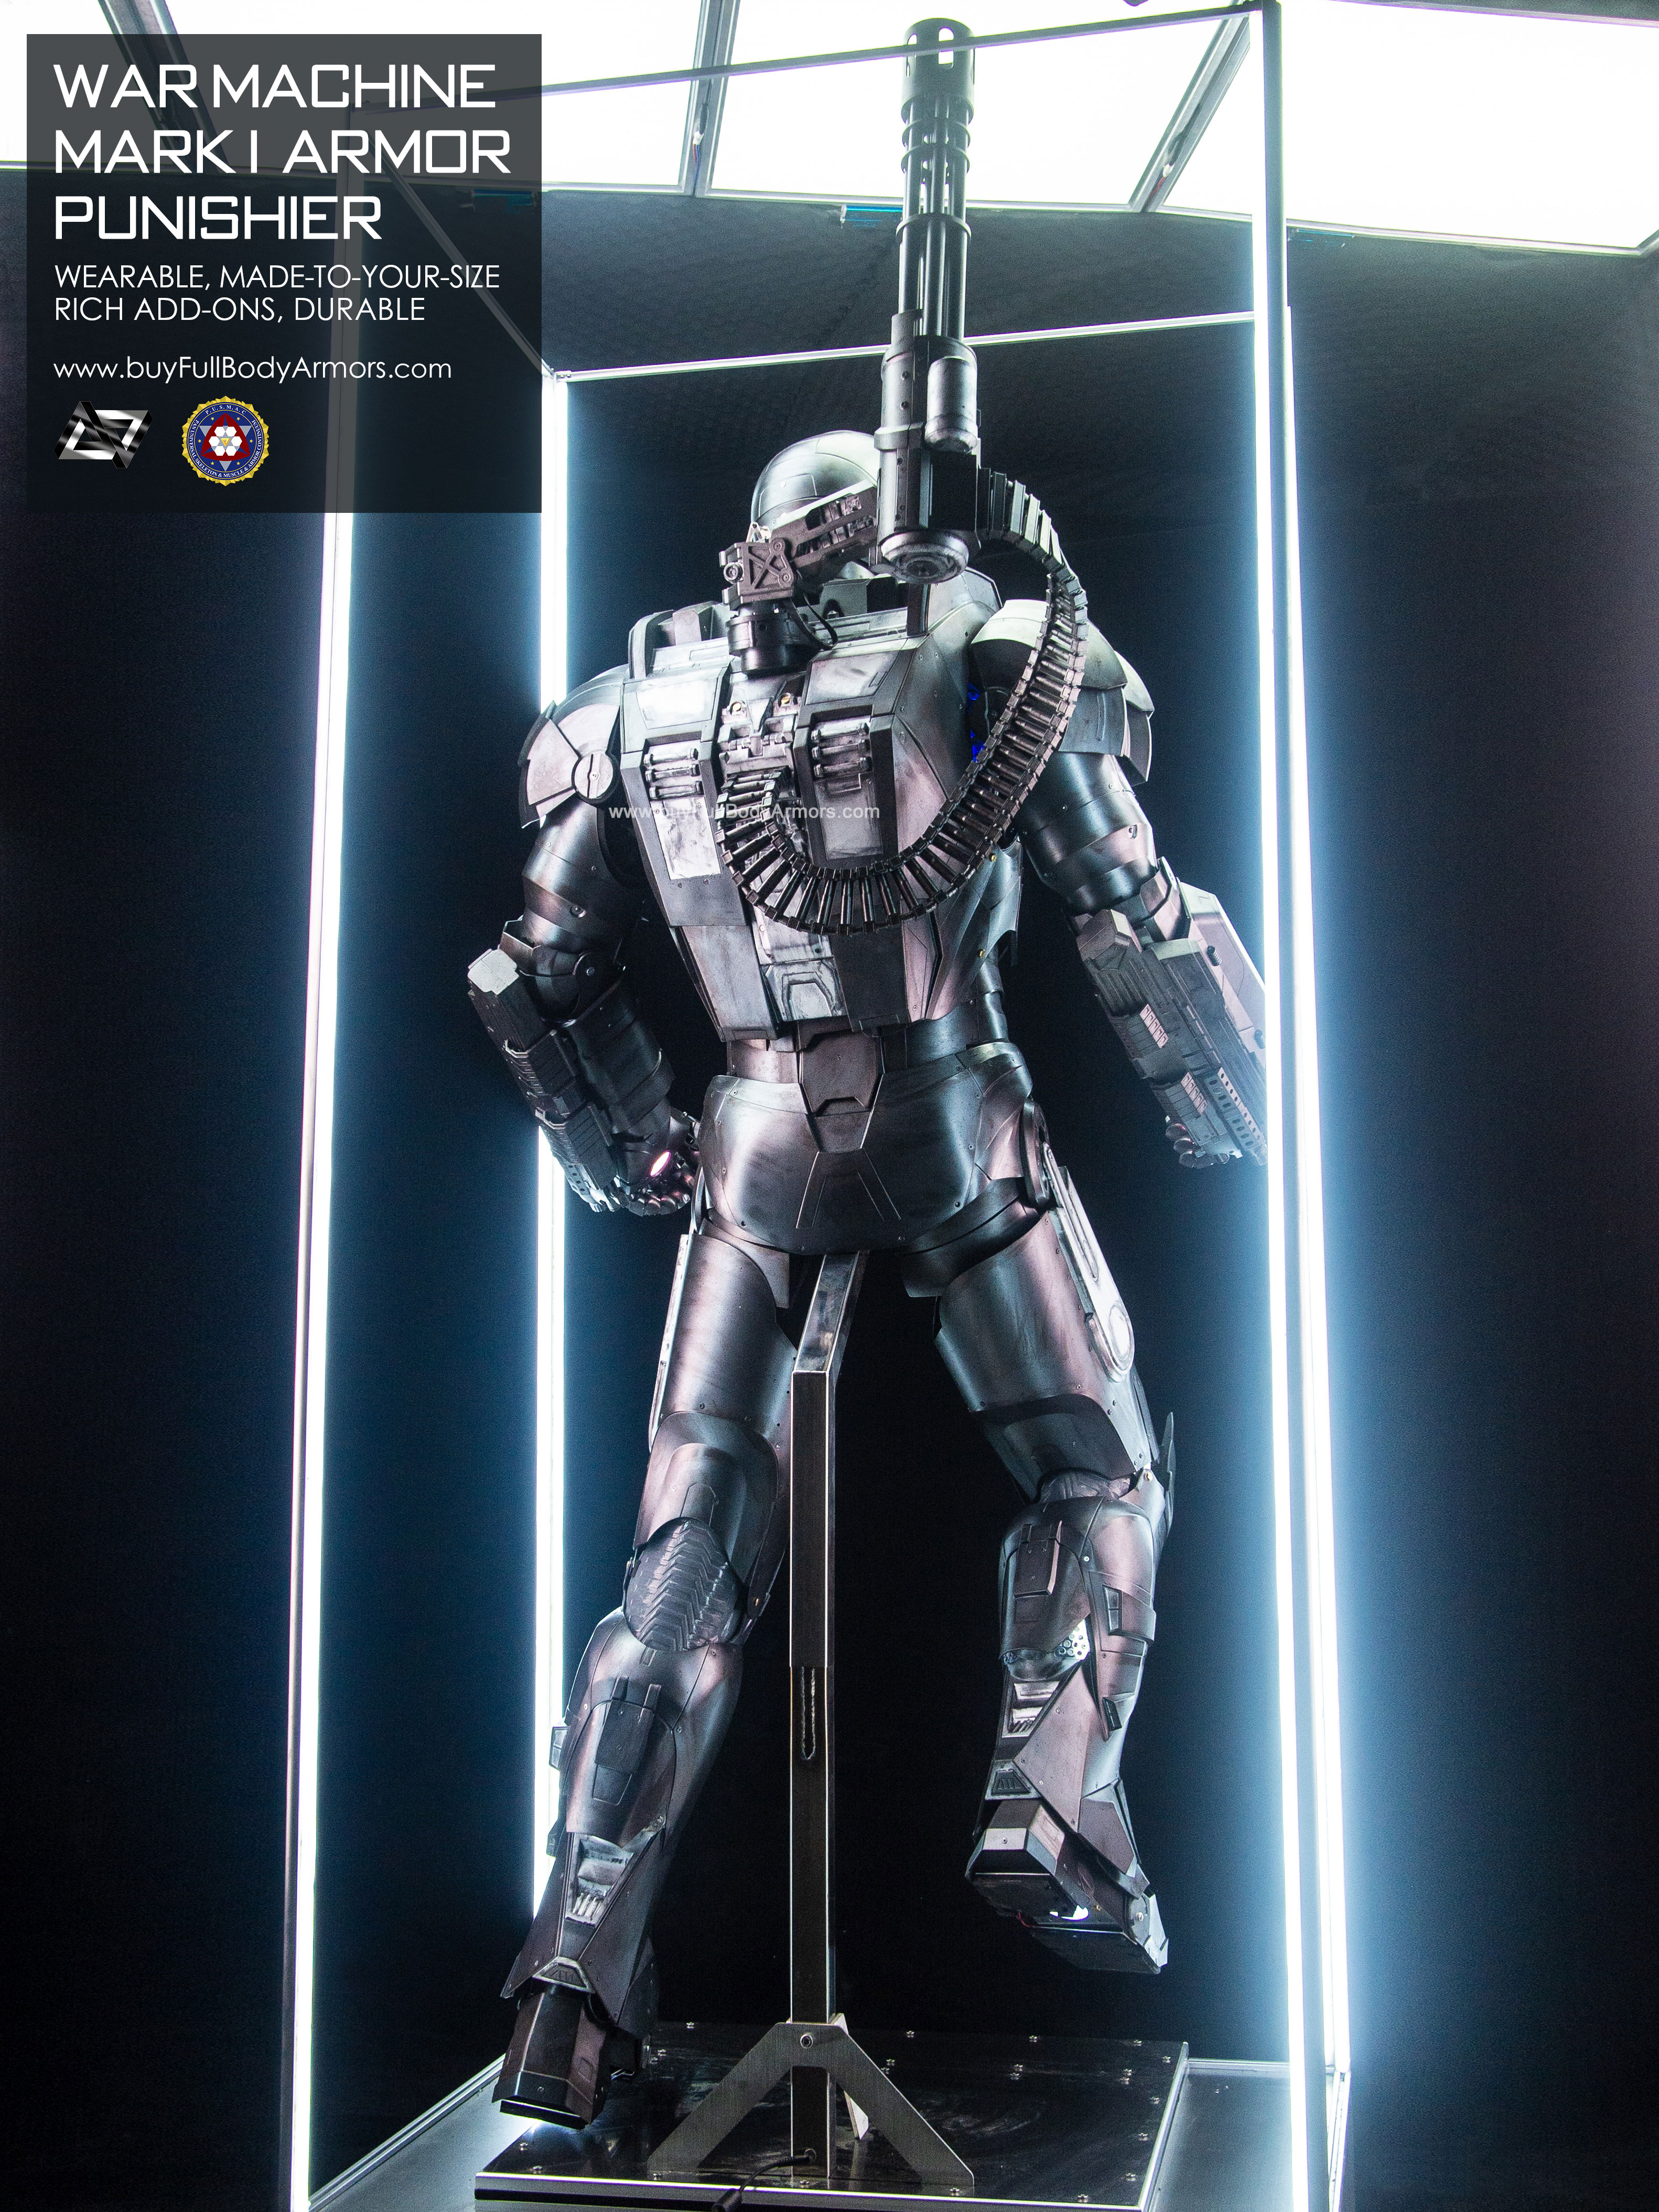 Wearable iron man suit War Machine Mark I Armor Suit punisher 5